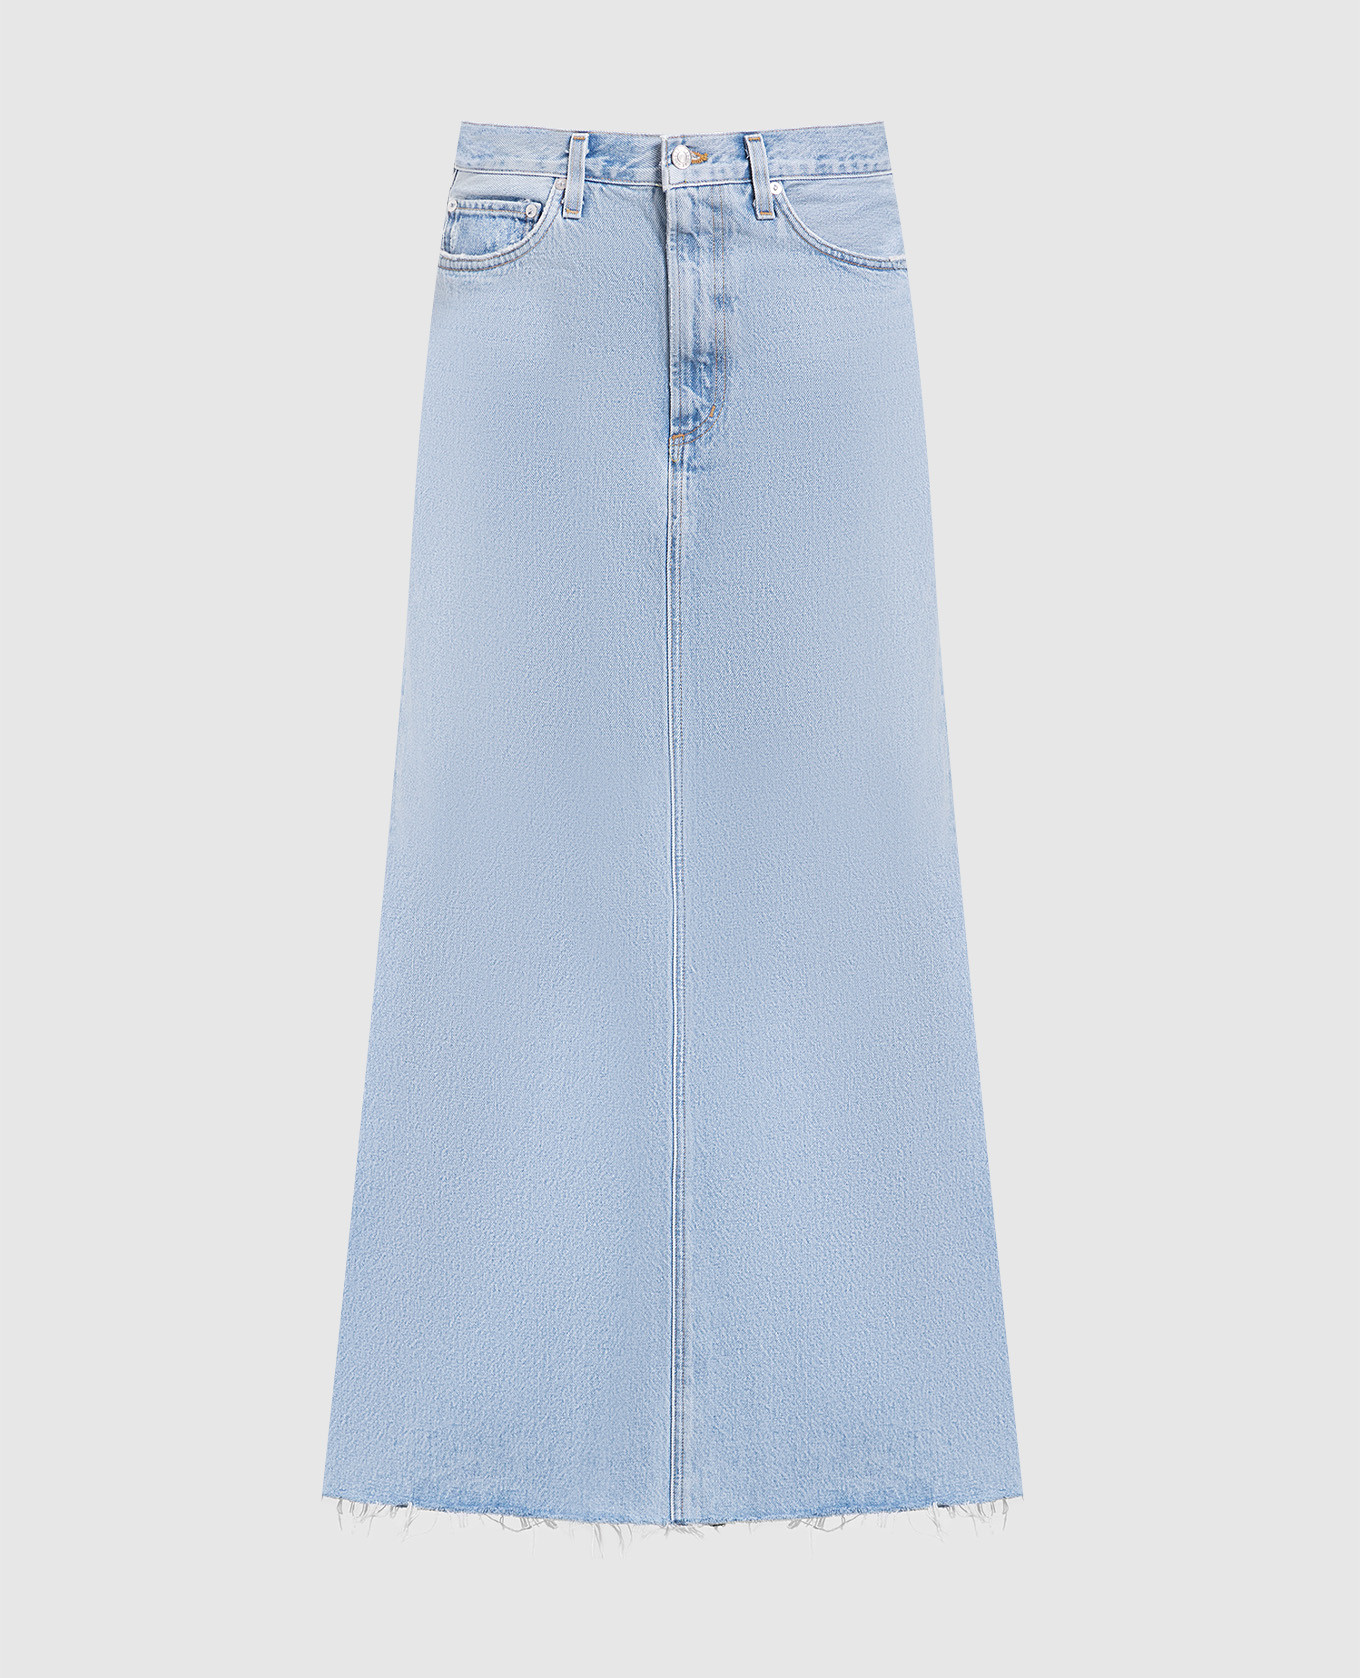 Blue denim skirt with a frayed effect